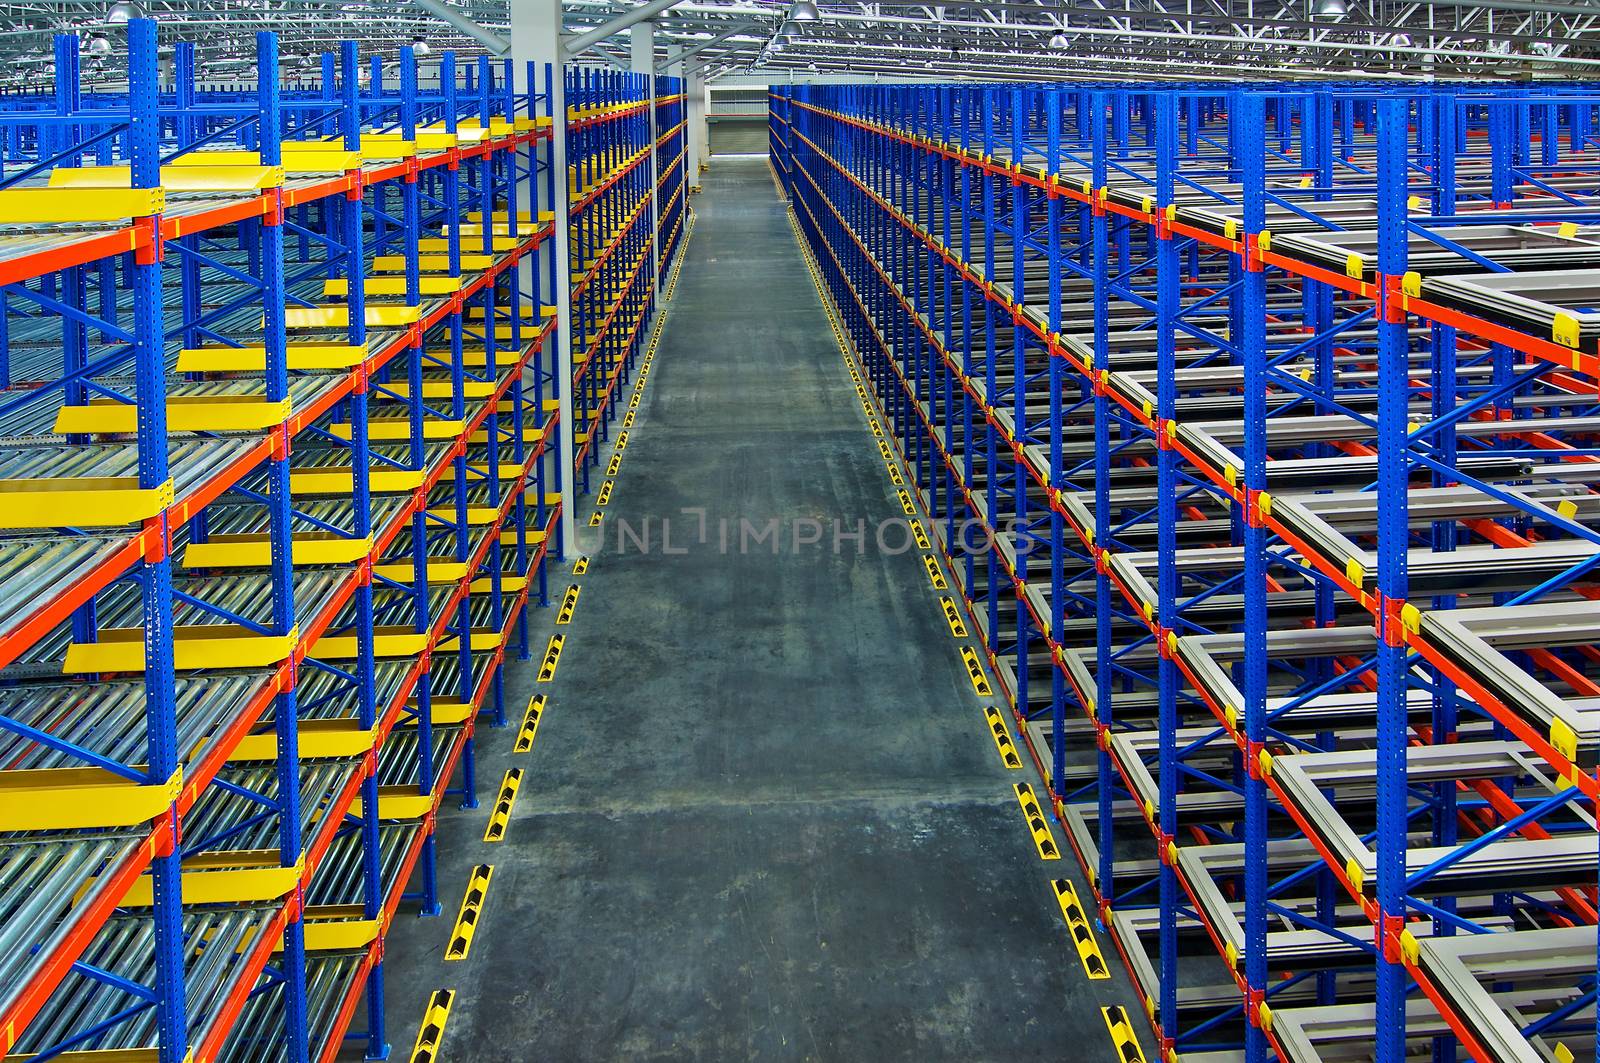 Pallet racking system for warehouse storage metal shelving distribution center